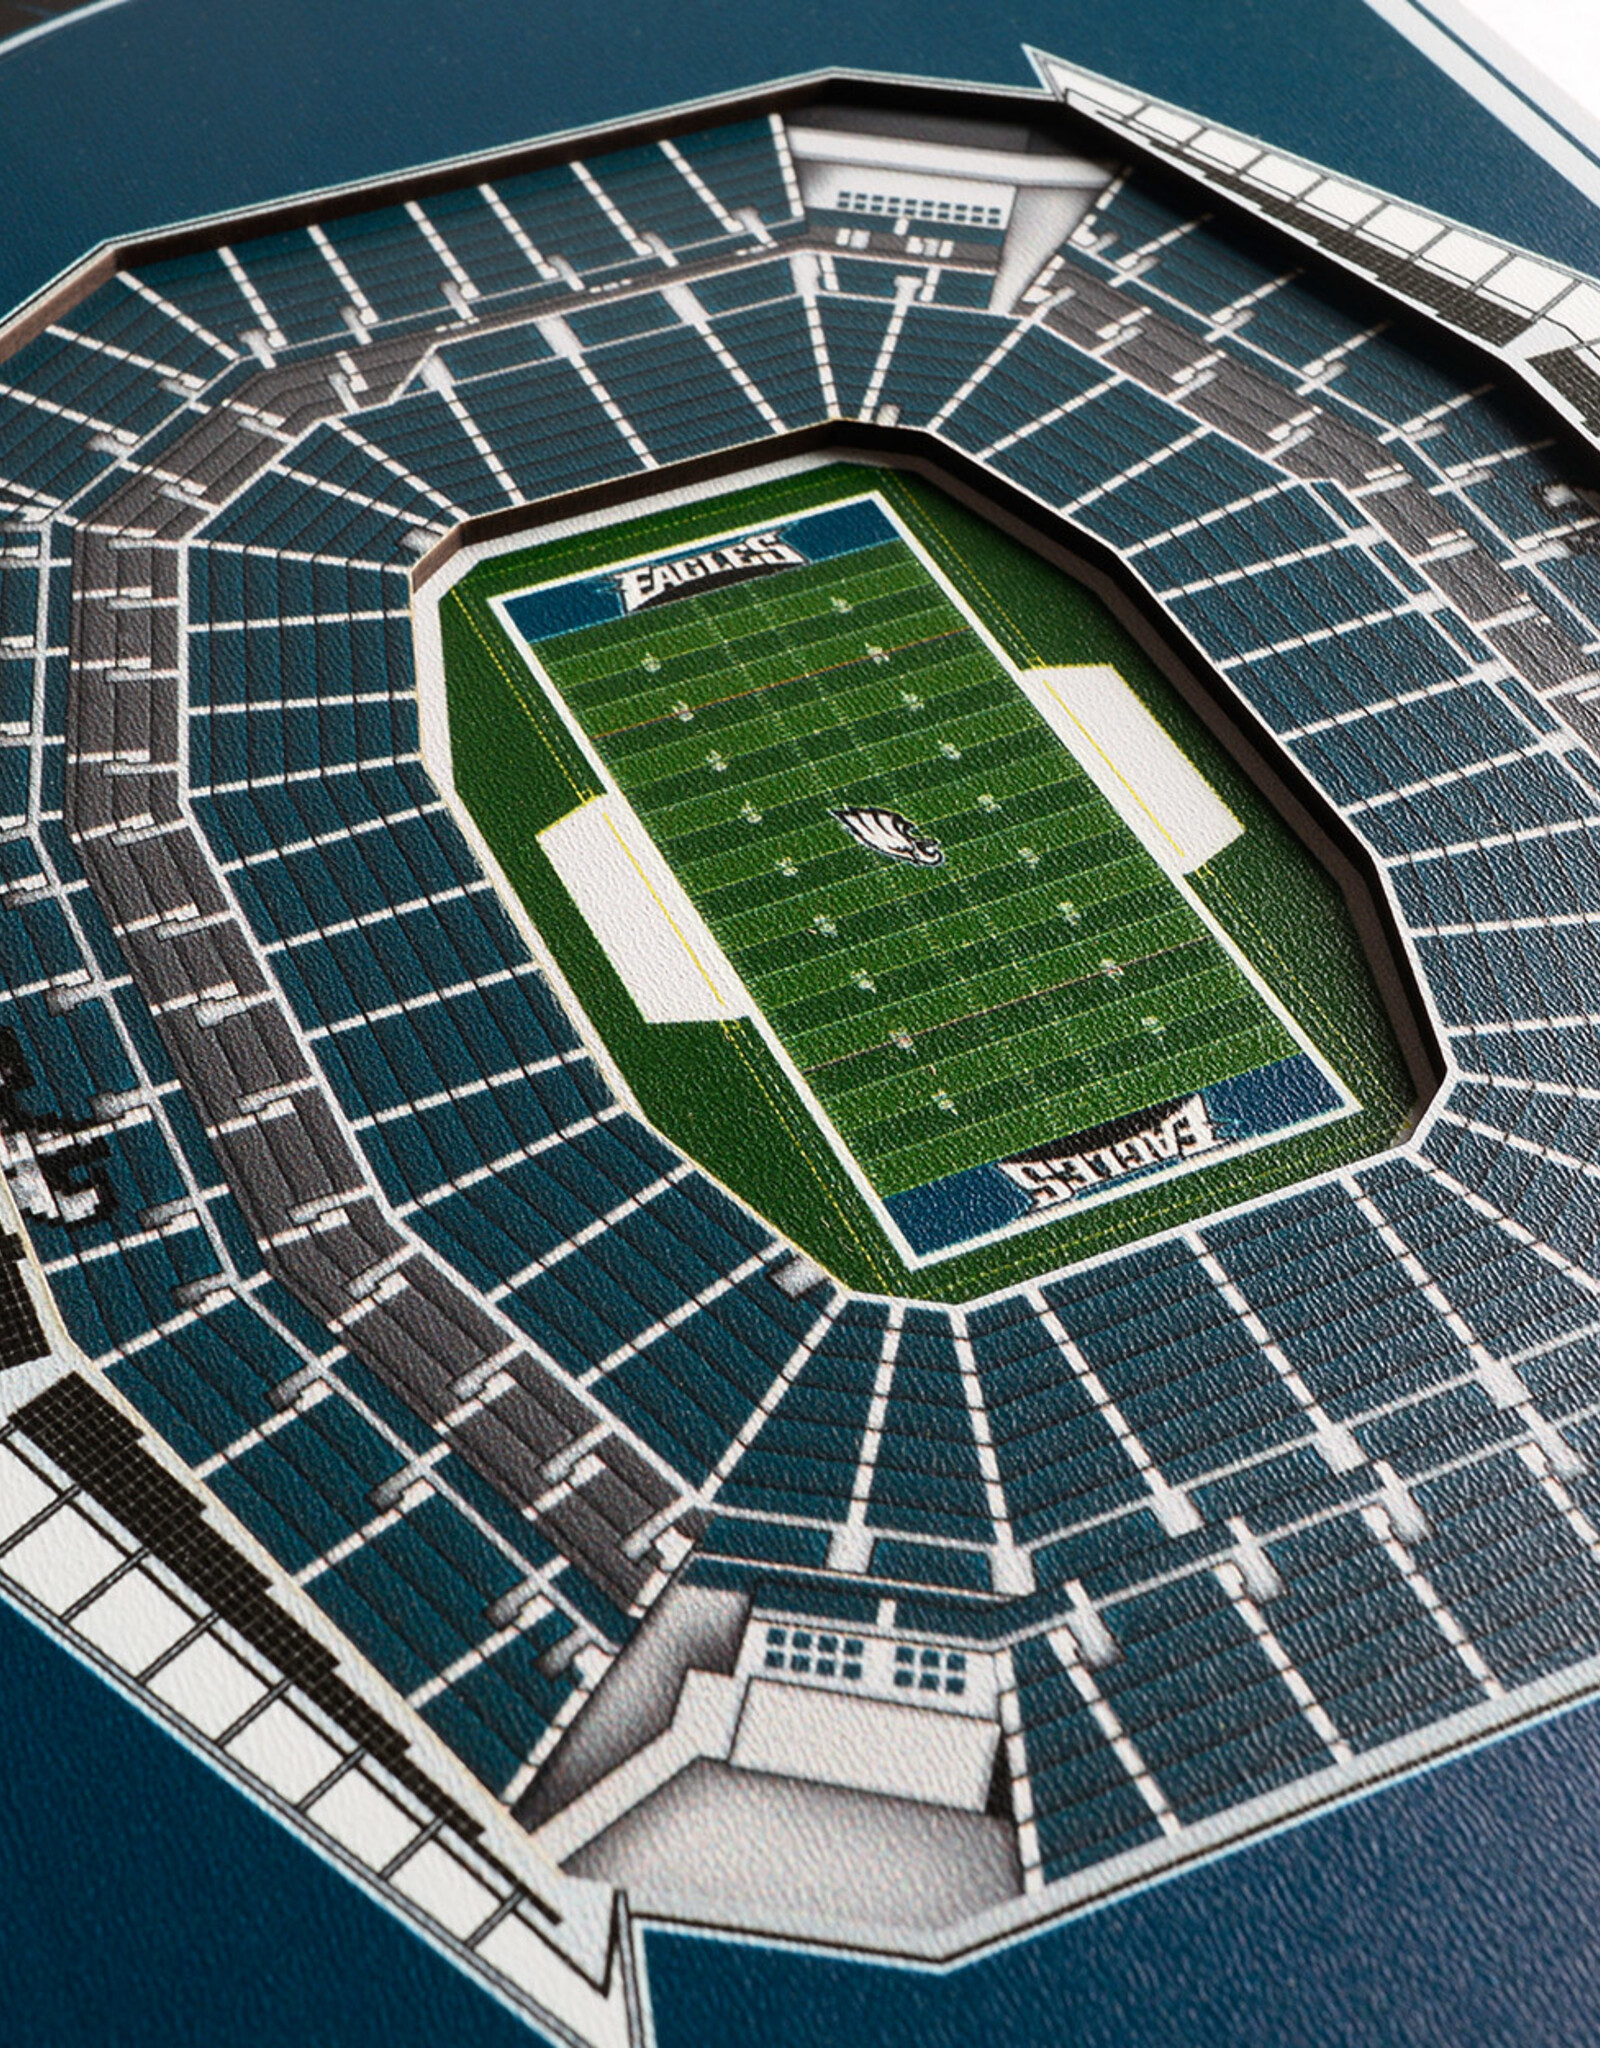 YOU THE FAN Philadelphia Eagles 3D StadiumView 8x32 Banner